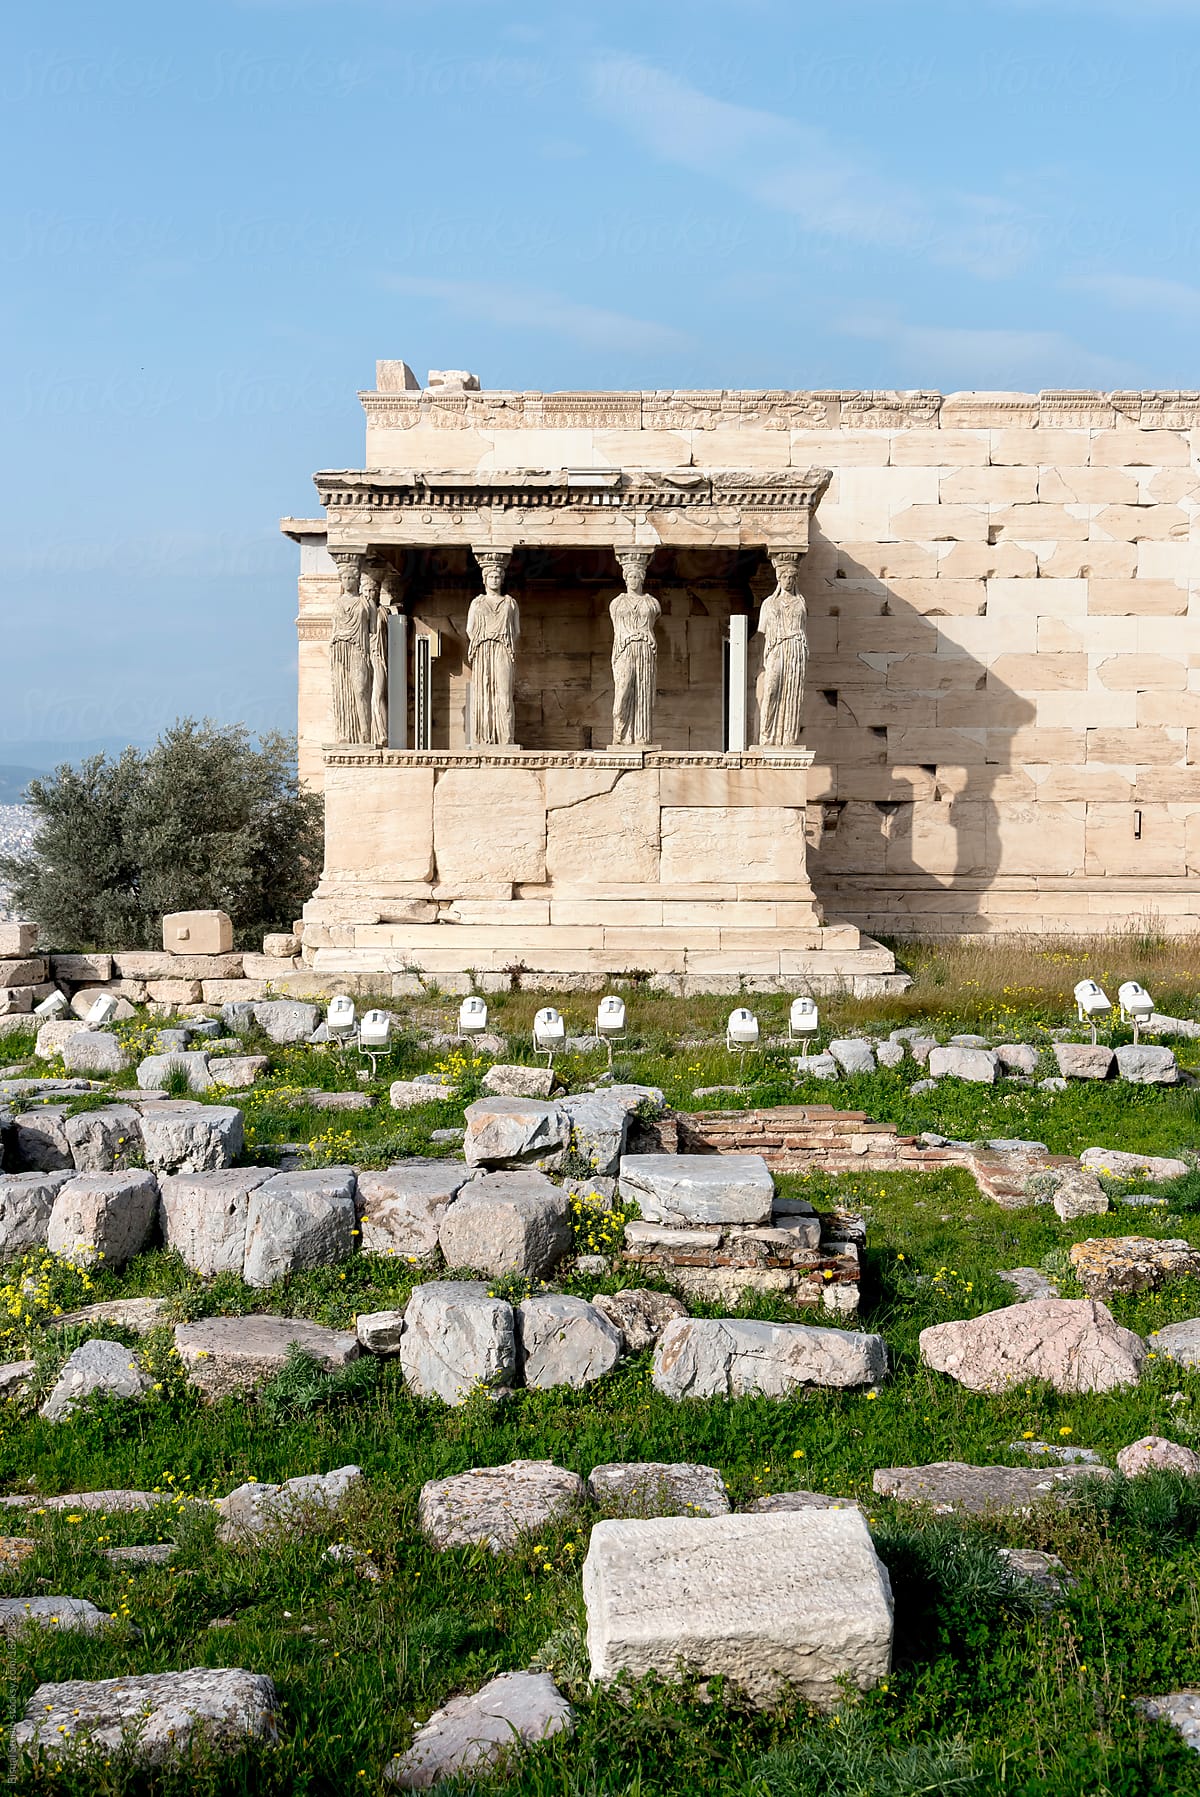 The Erechtheion on the Acropolis in Athens